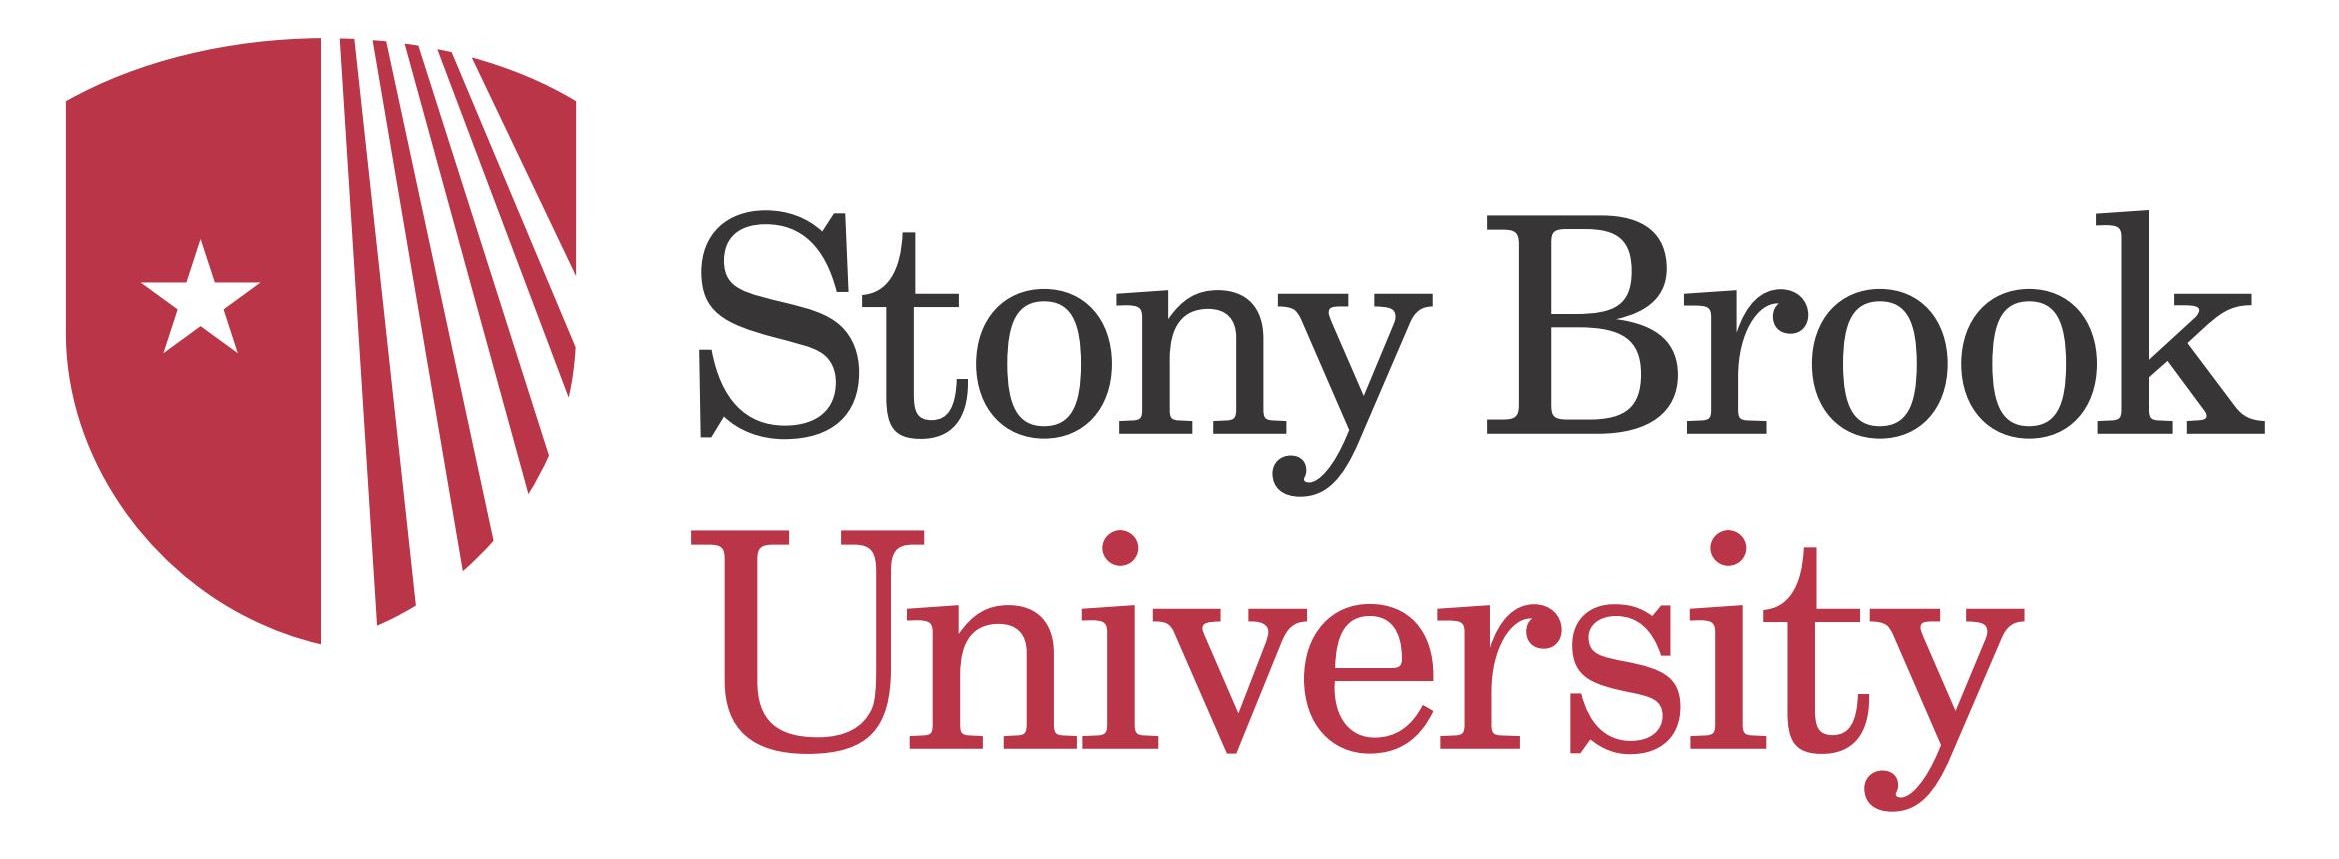 Stony-Brook-University-logo.jpg